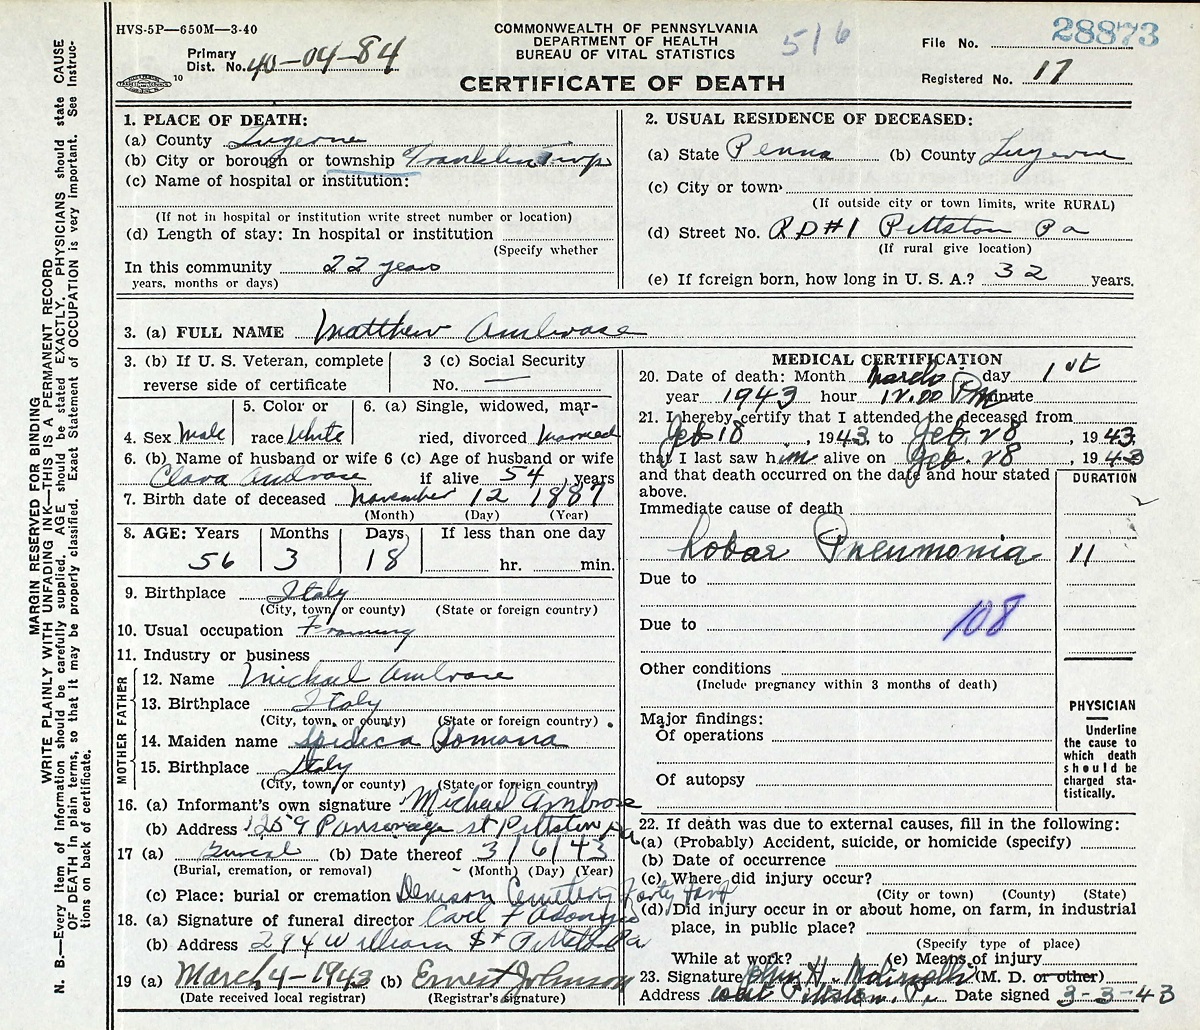 Matteo Abruzzese (Ambrose) Death Certificate